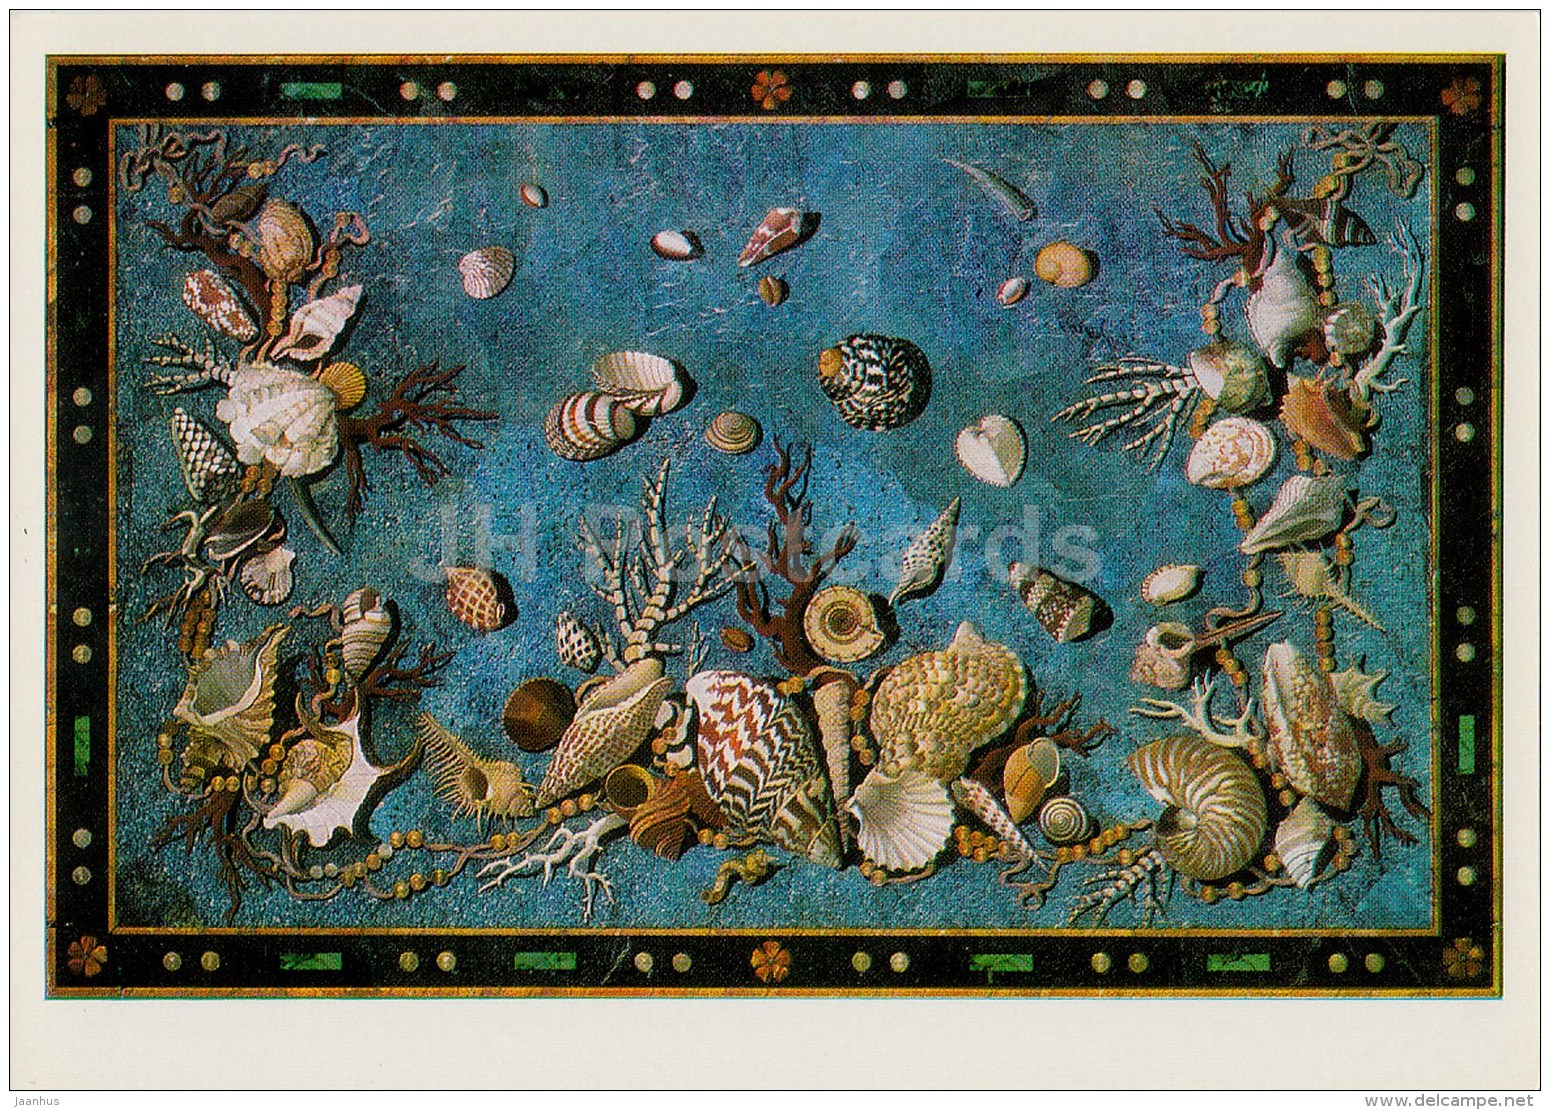 Table-top , The Sea Bottom - shells - Florentine Mosaic - Italian art - 1974 - Russia USSR - unused - JH Postcards